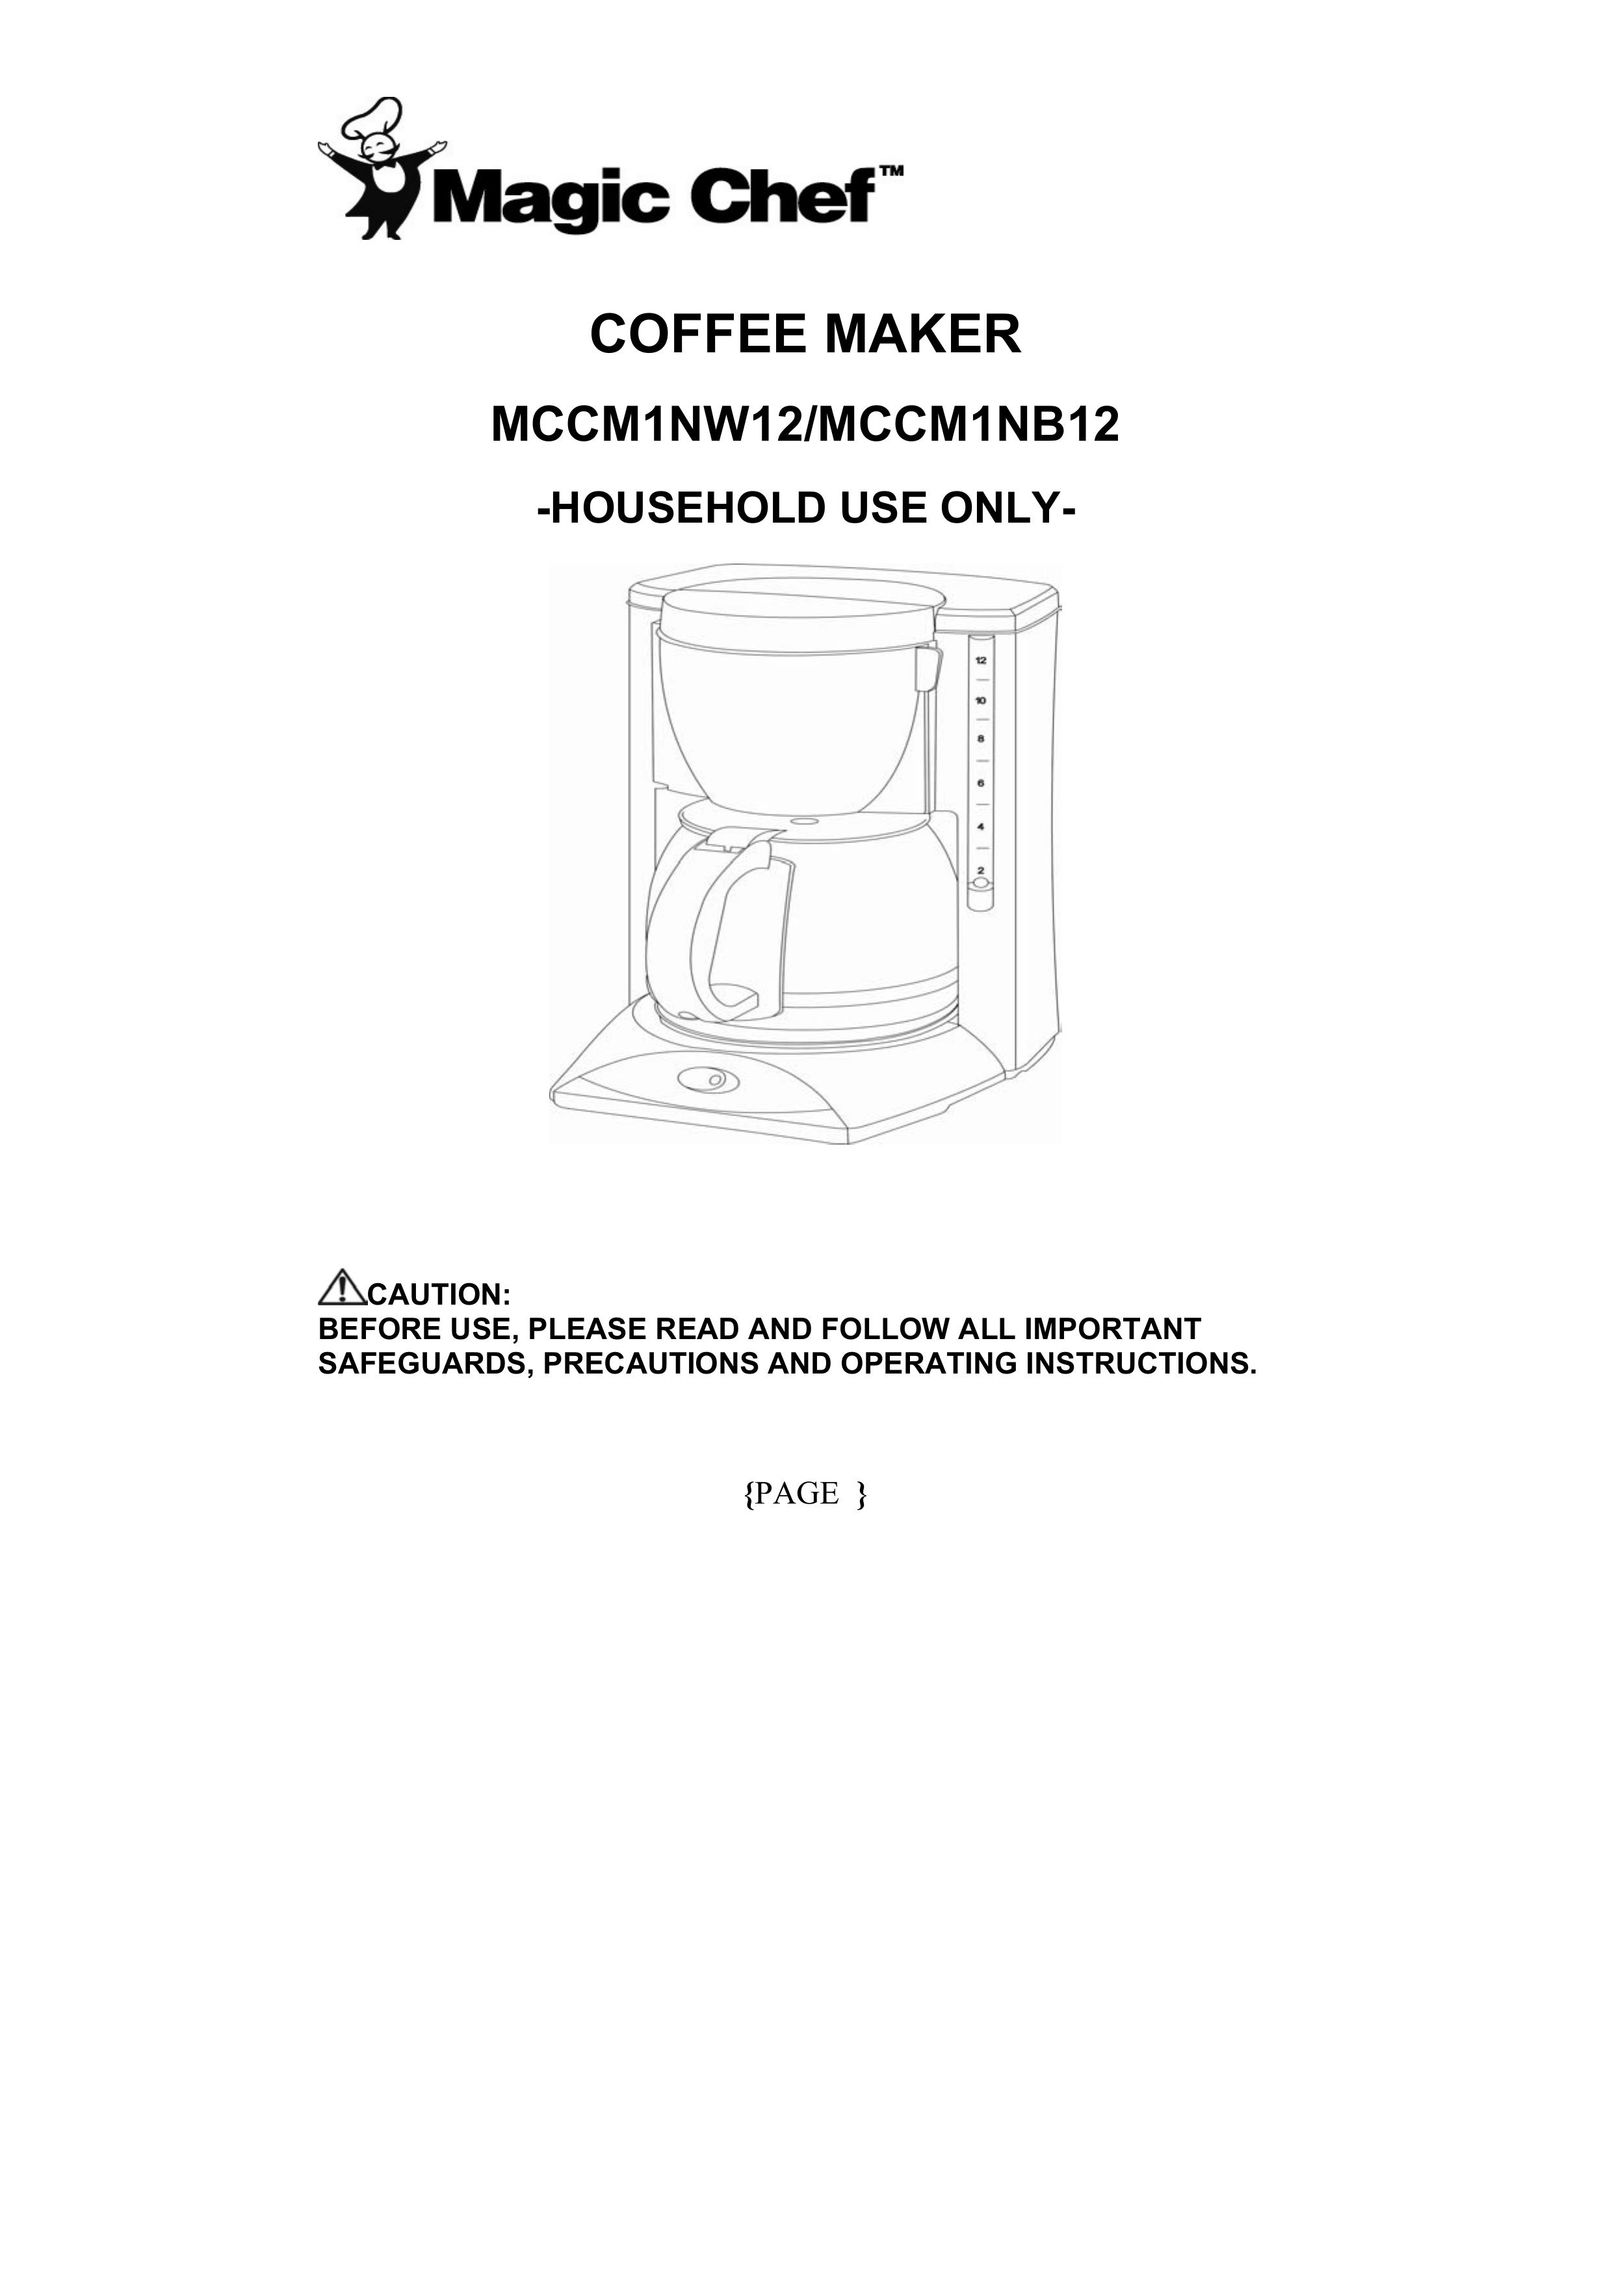 Magic Chef MCCM1NW12 Coffeemaker User Manual